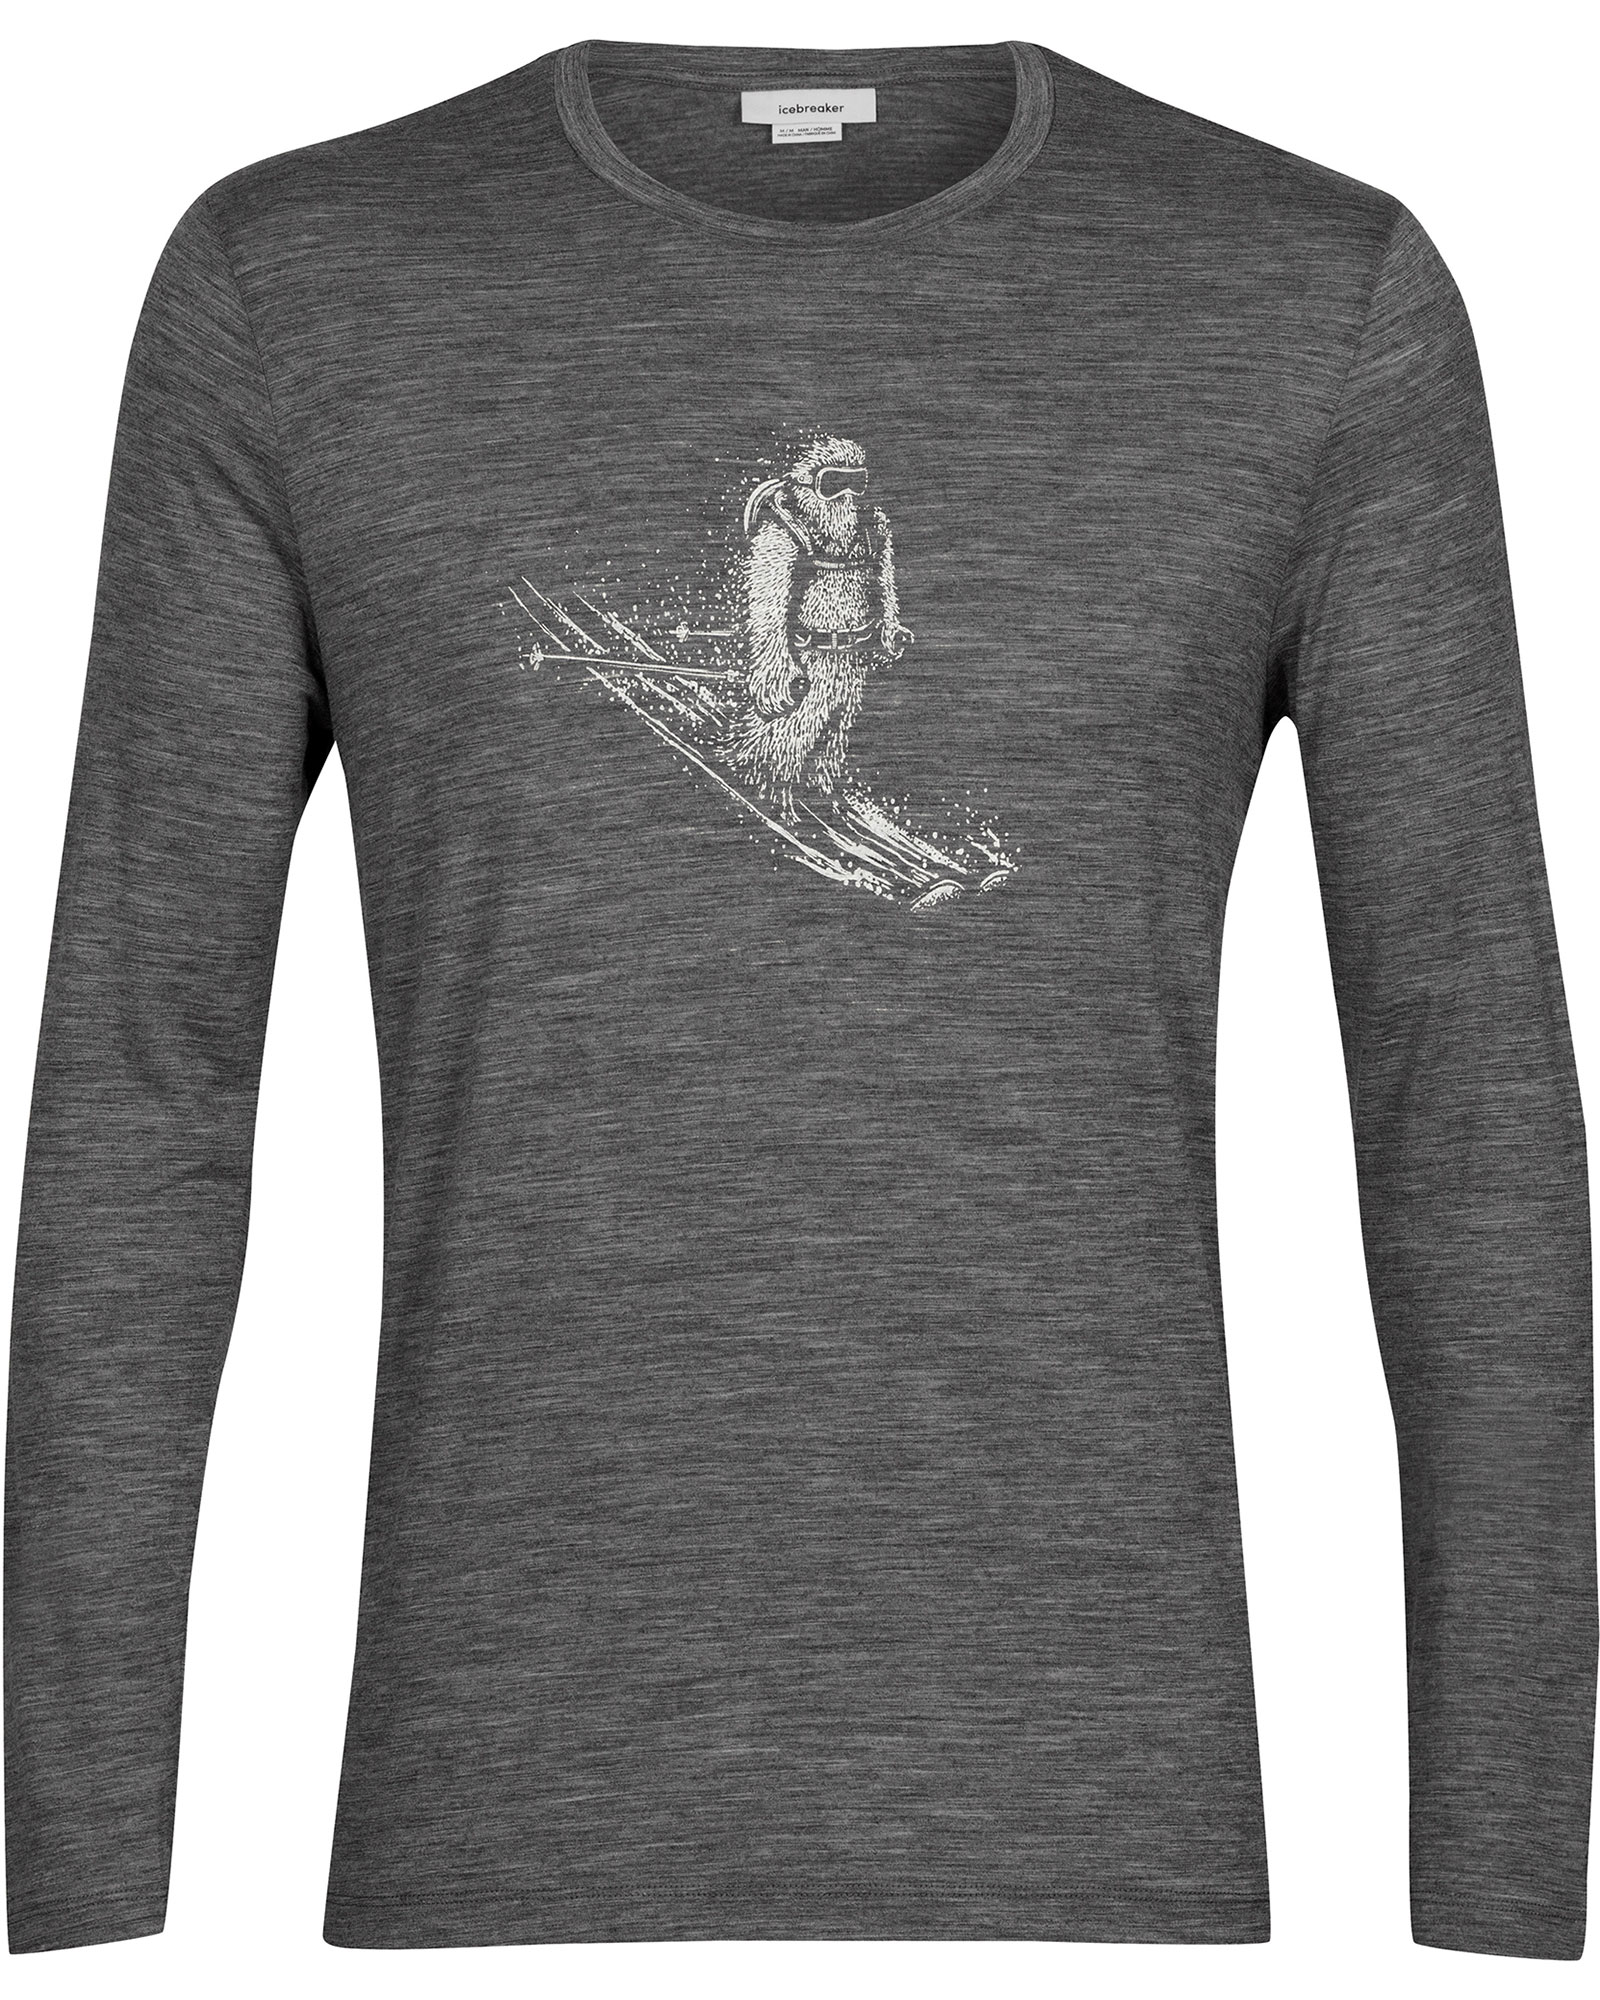 Icebreaker Tech Lite 2 Skiing Yeti Men’s Merino Long Sleeve T Shirt - Gritstone Heather L